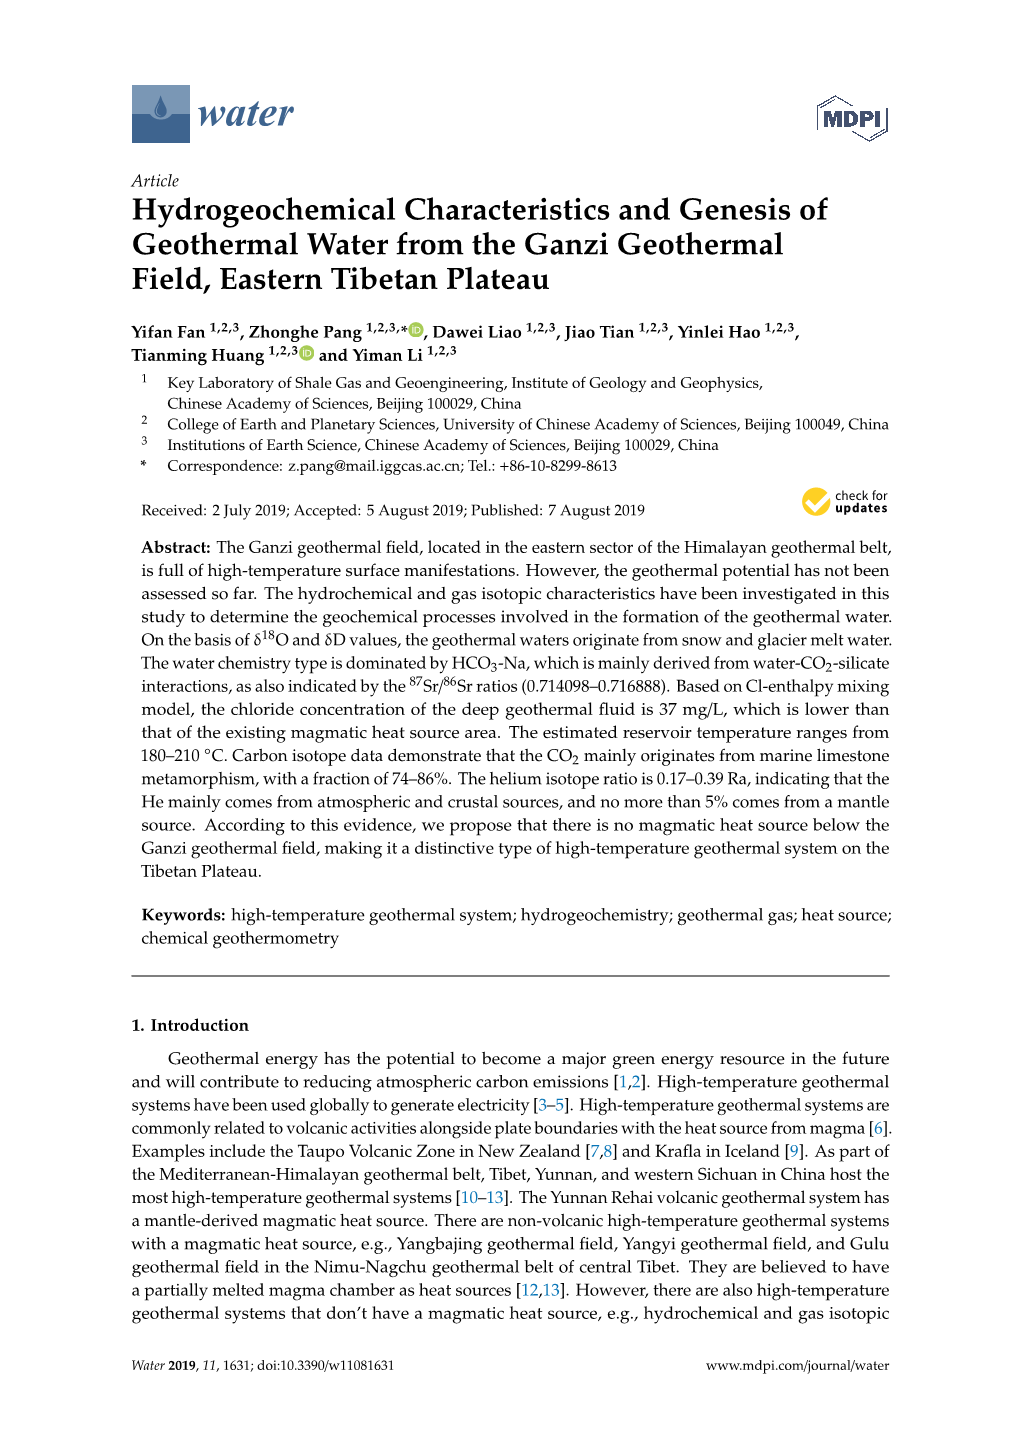 Hydrogeochemical Characteristics and Genesis of Geothermal Water from the Ganzi Geothermal Field, Eastern Tibetan Plateau